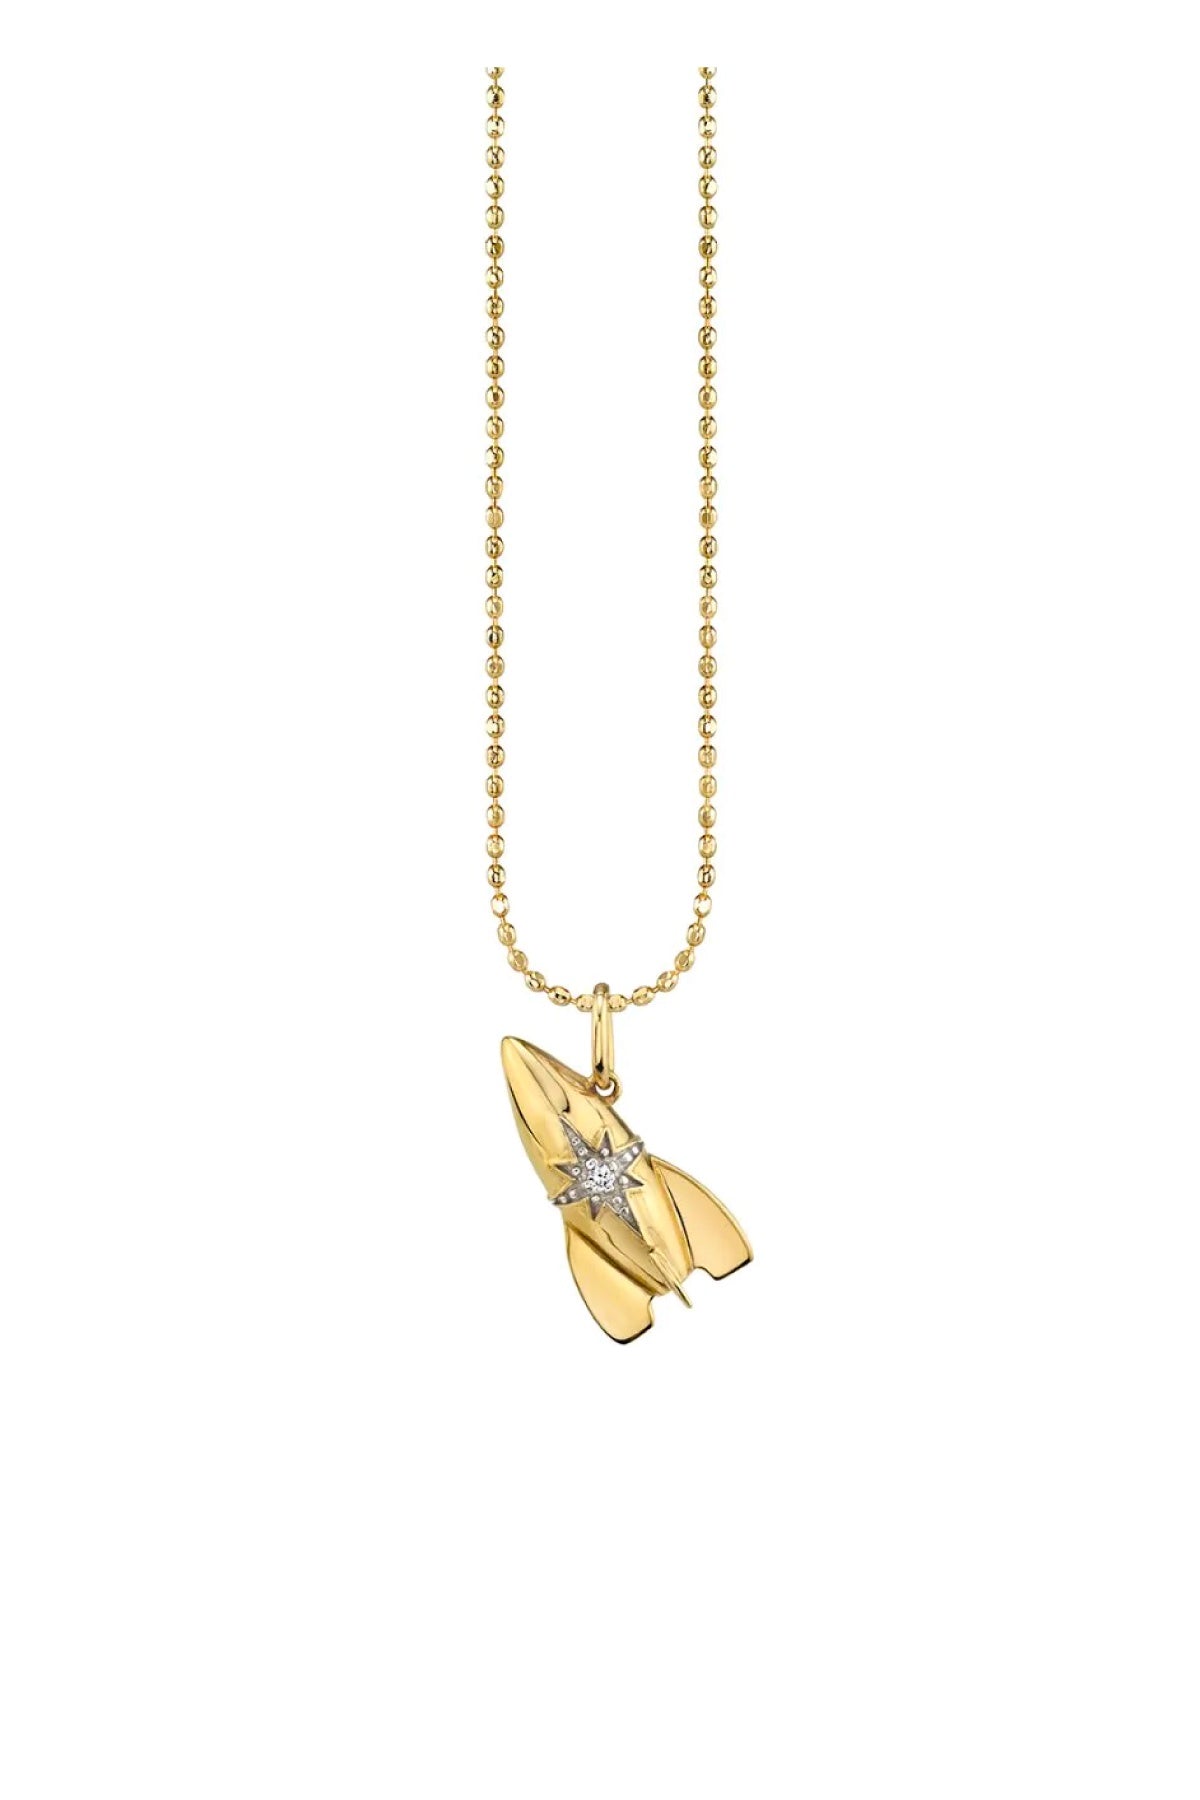 Sydney Evan Diamond Rocket Charm Necklace - Yellow Gold